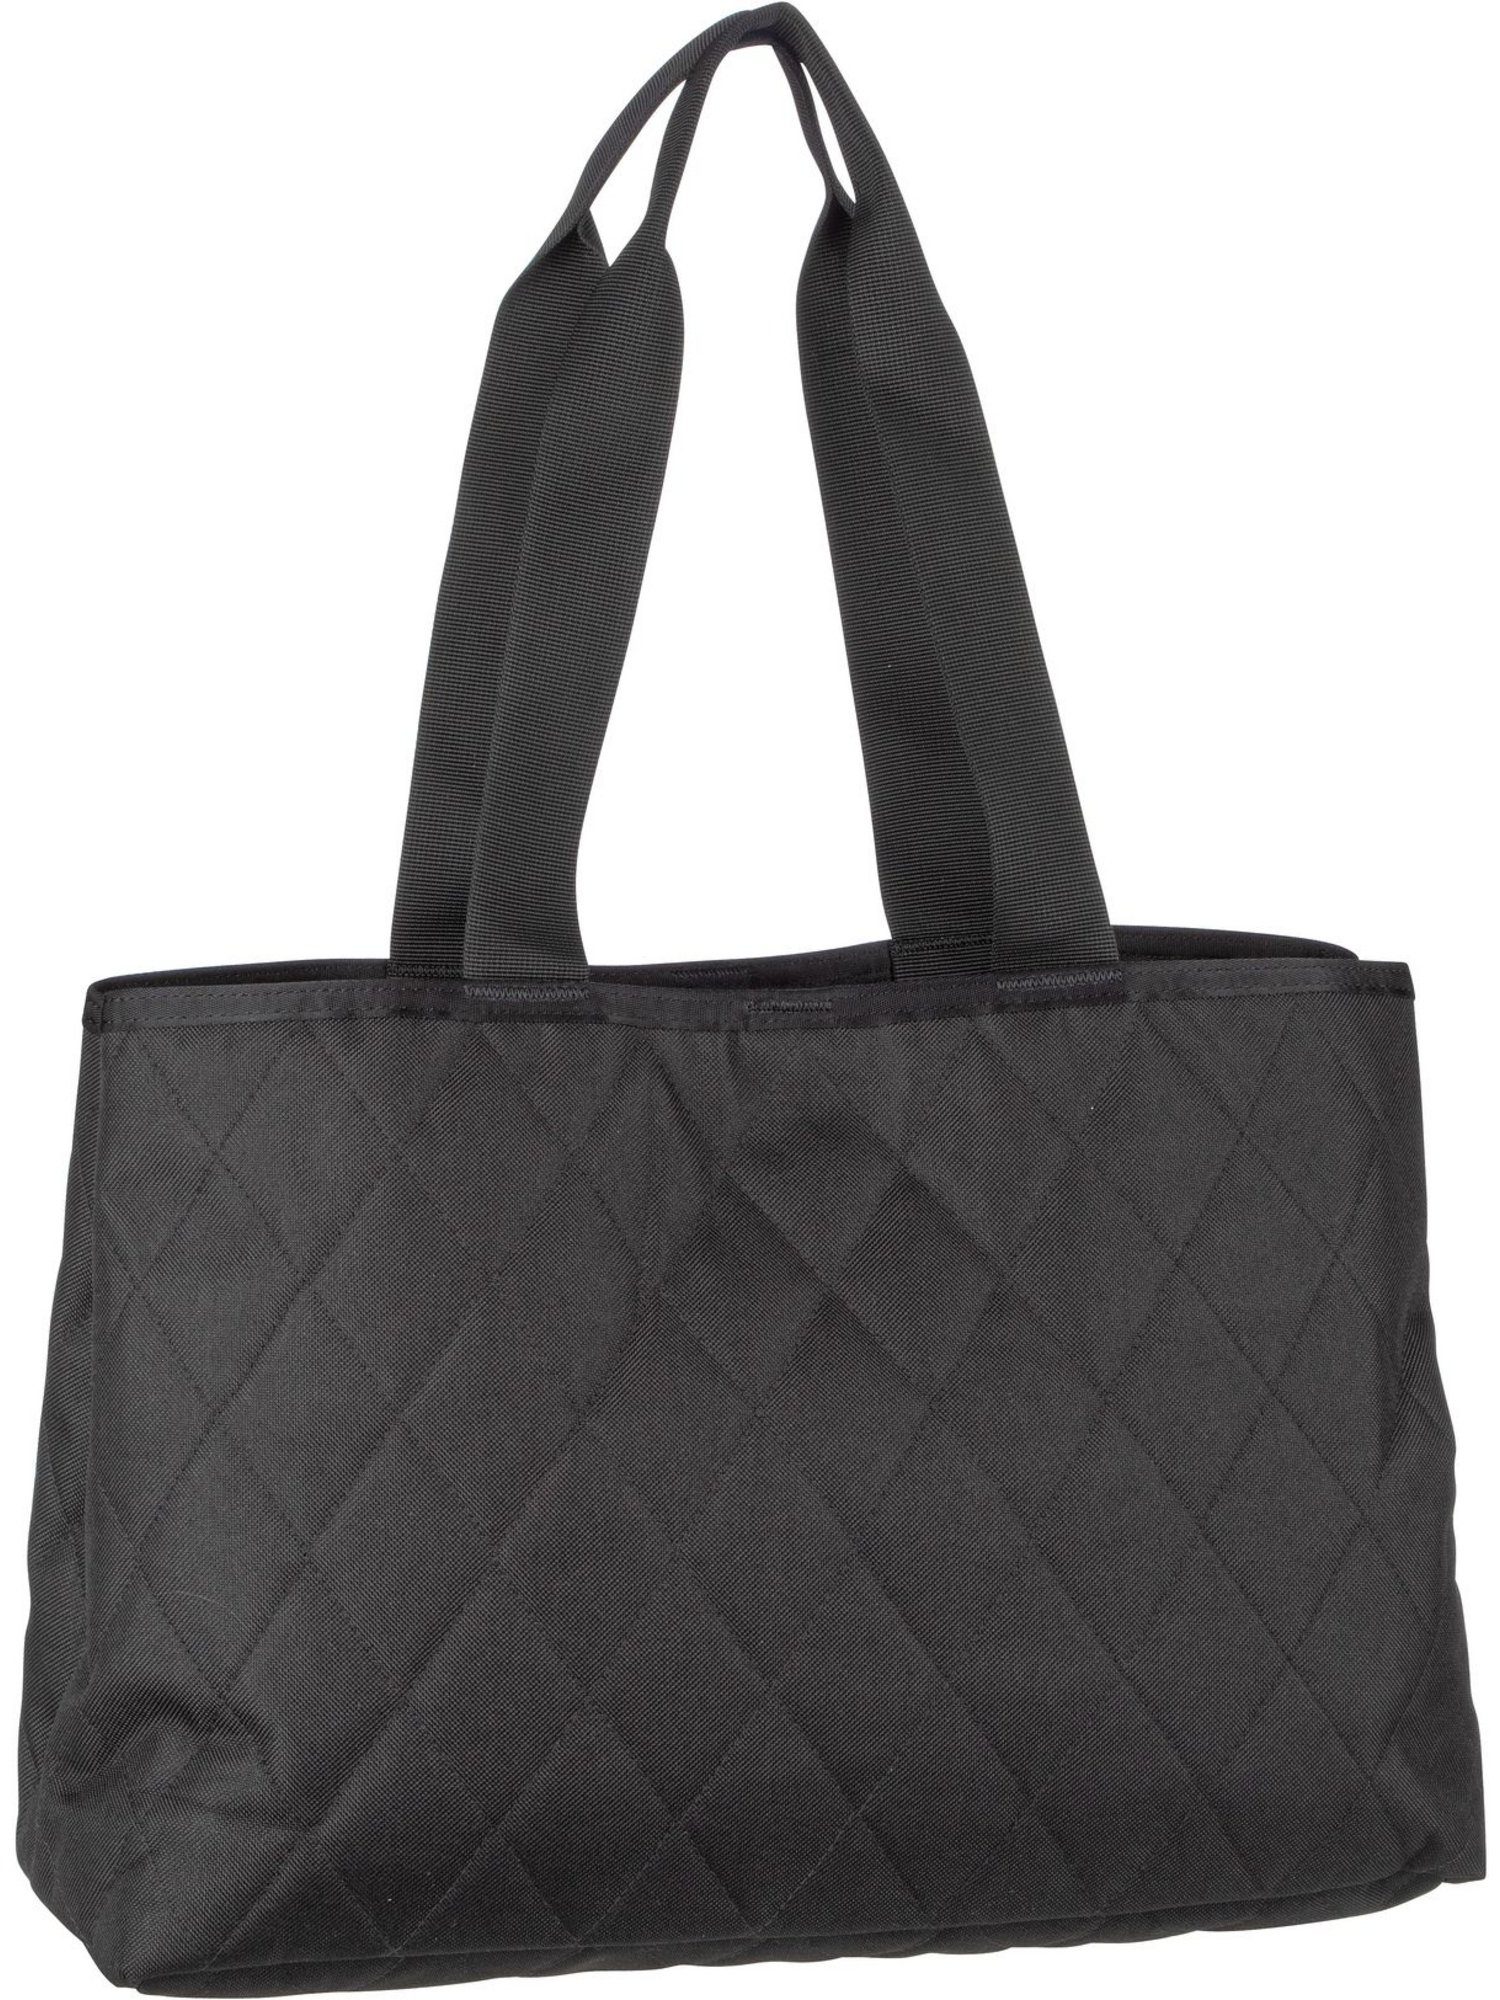 REISENTHEL® Handtasche classic shopper L, Shopper Rhombus Black